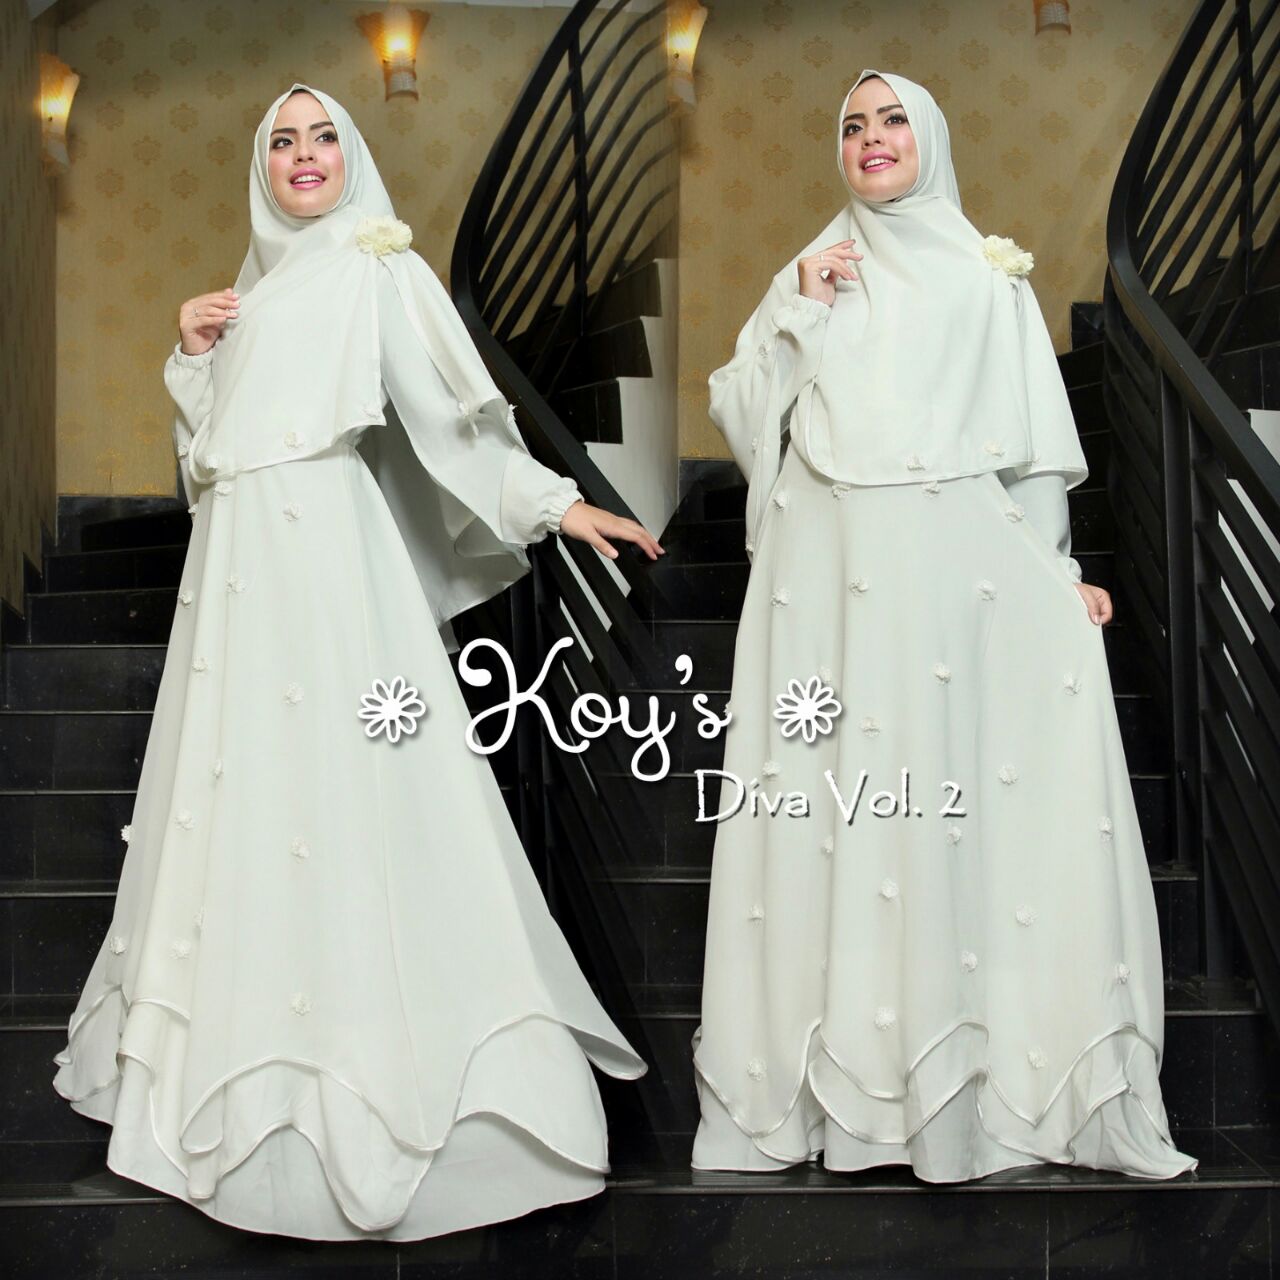 Terbaru Busana Muslim 2018 Diva Syari By Koys LifeStyle Fashion